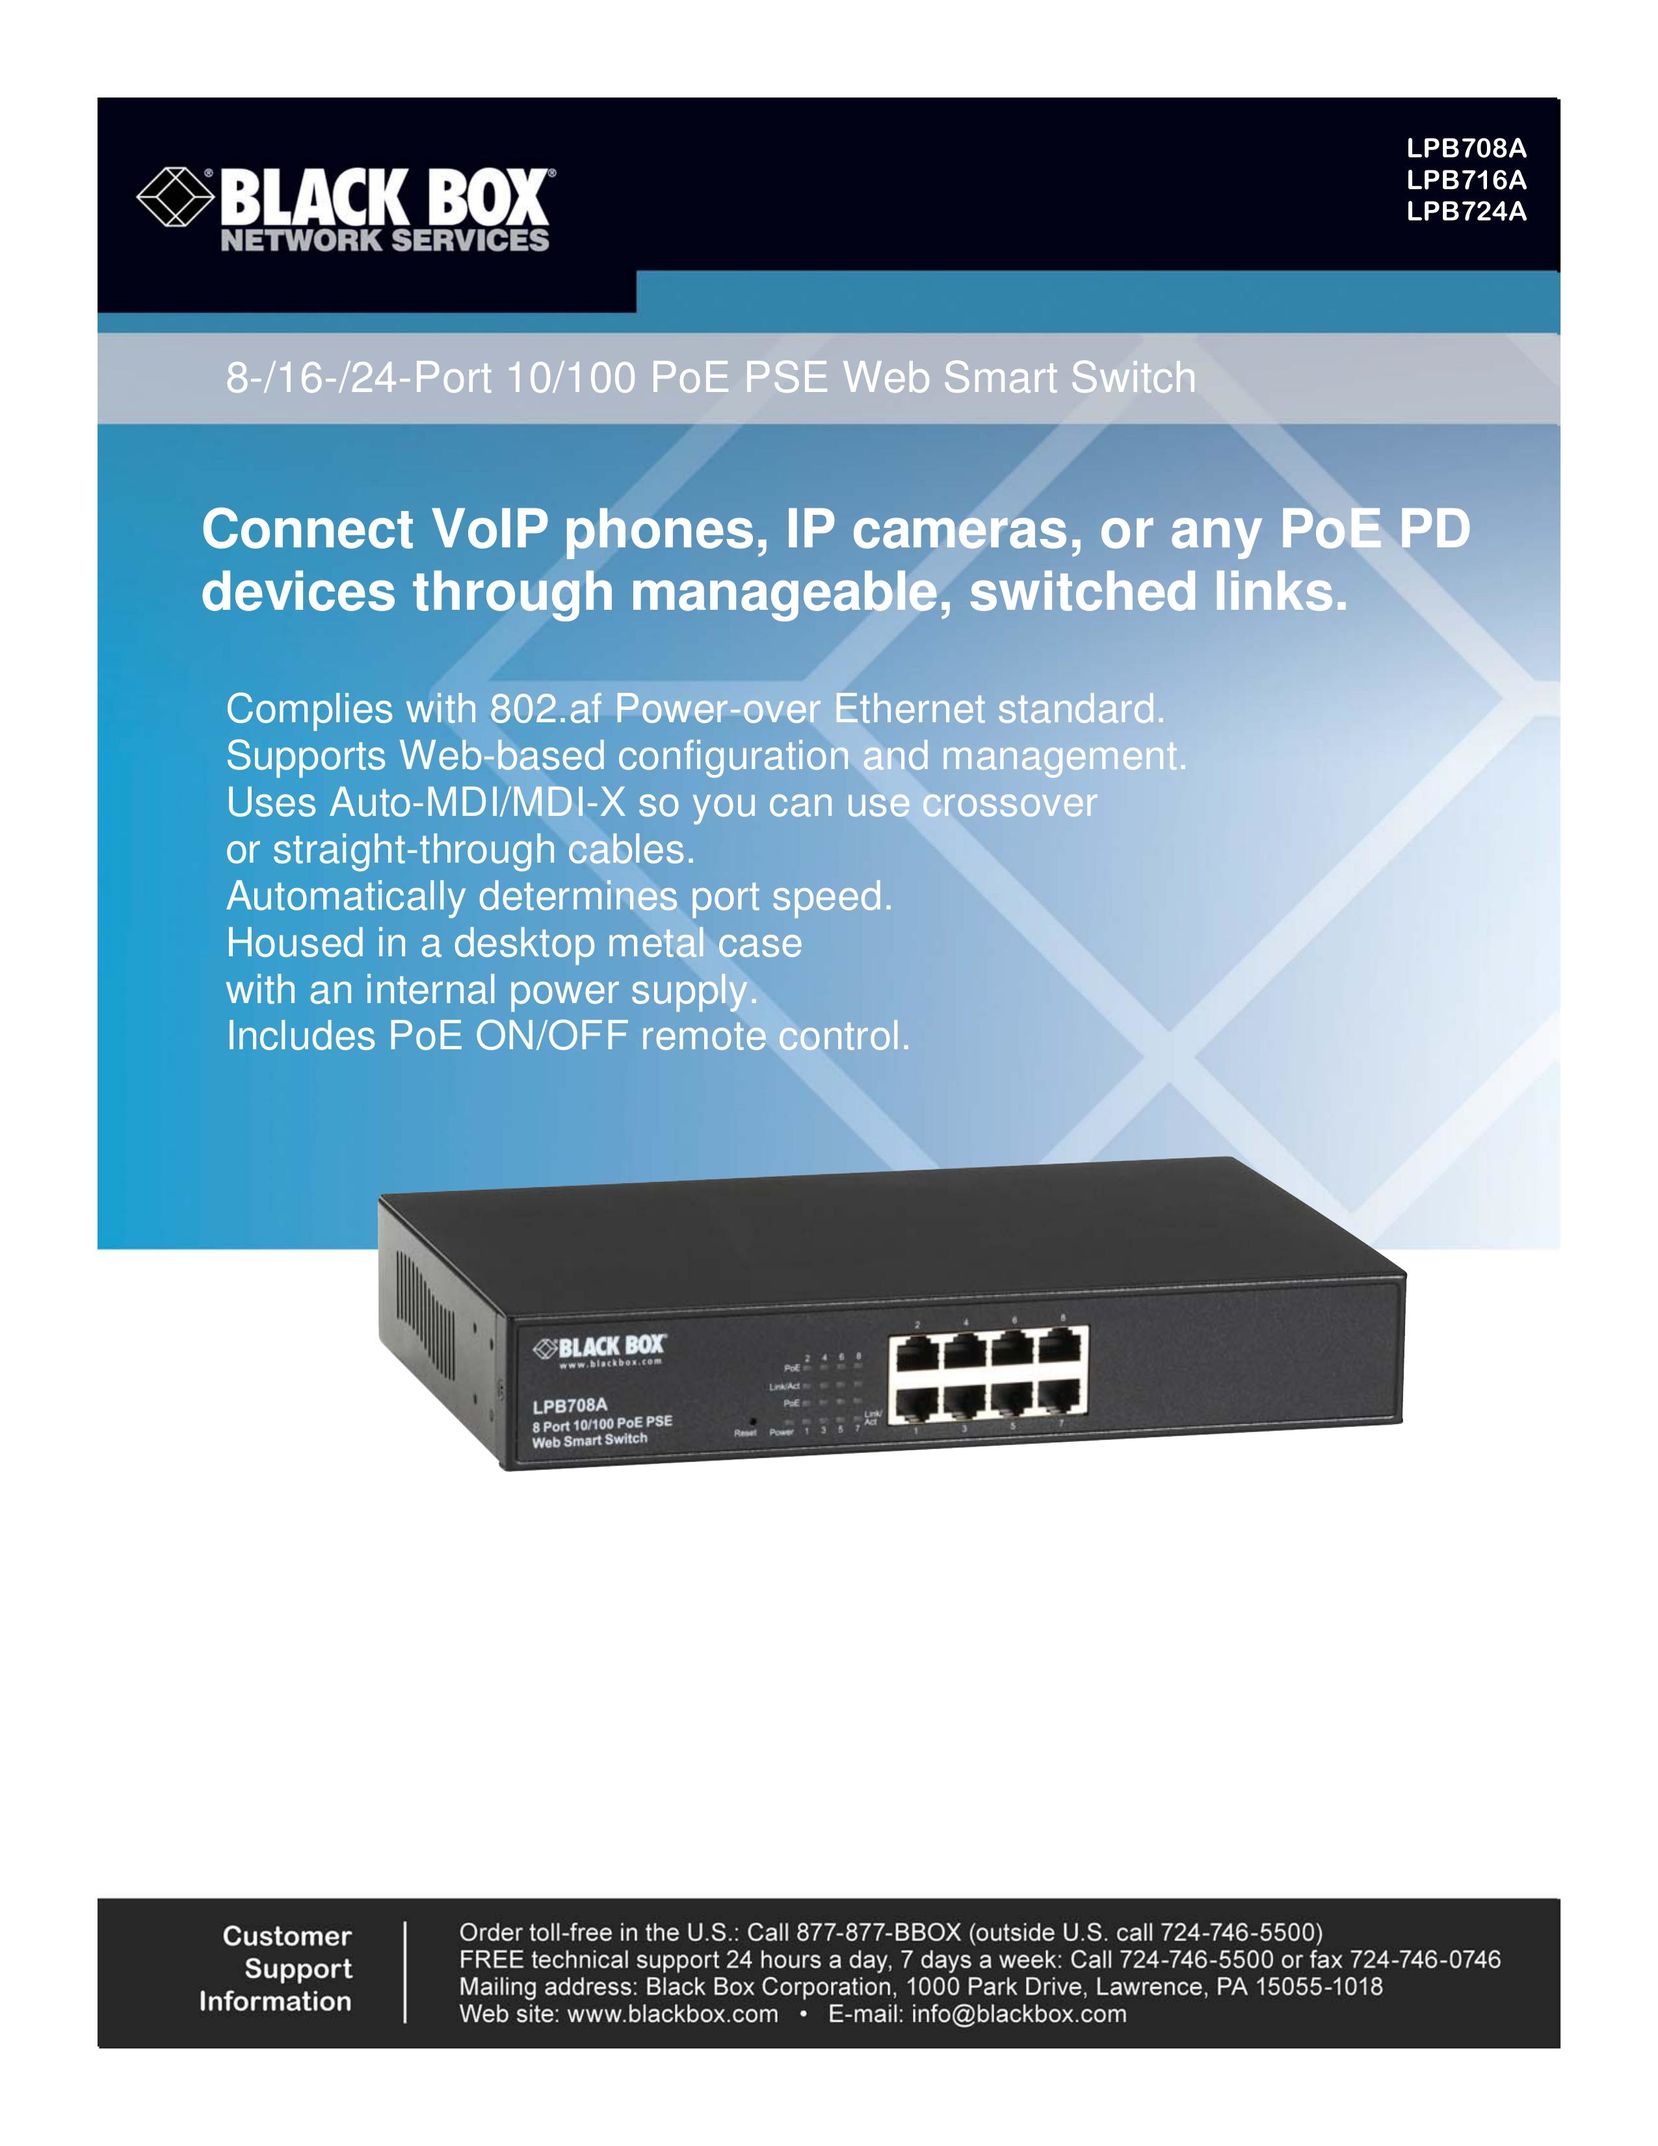 Black Box 8-/16-/24-Port 10/100 PoE PSE Web Smart Switch Network Hardware User Manual